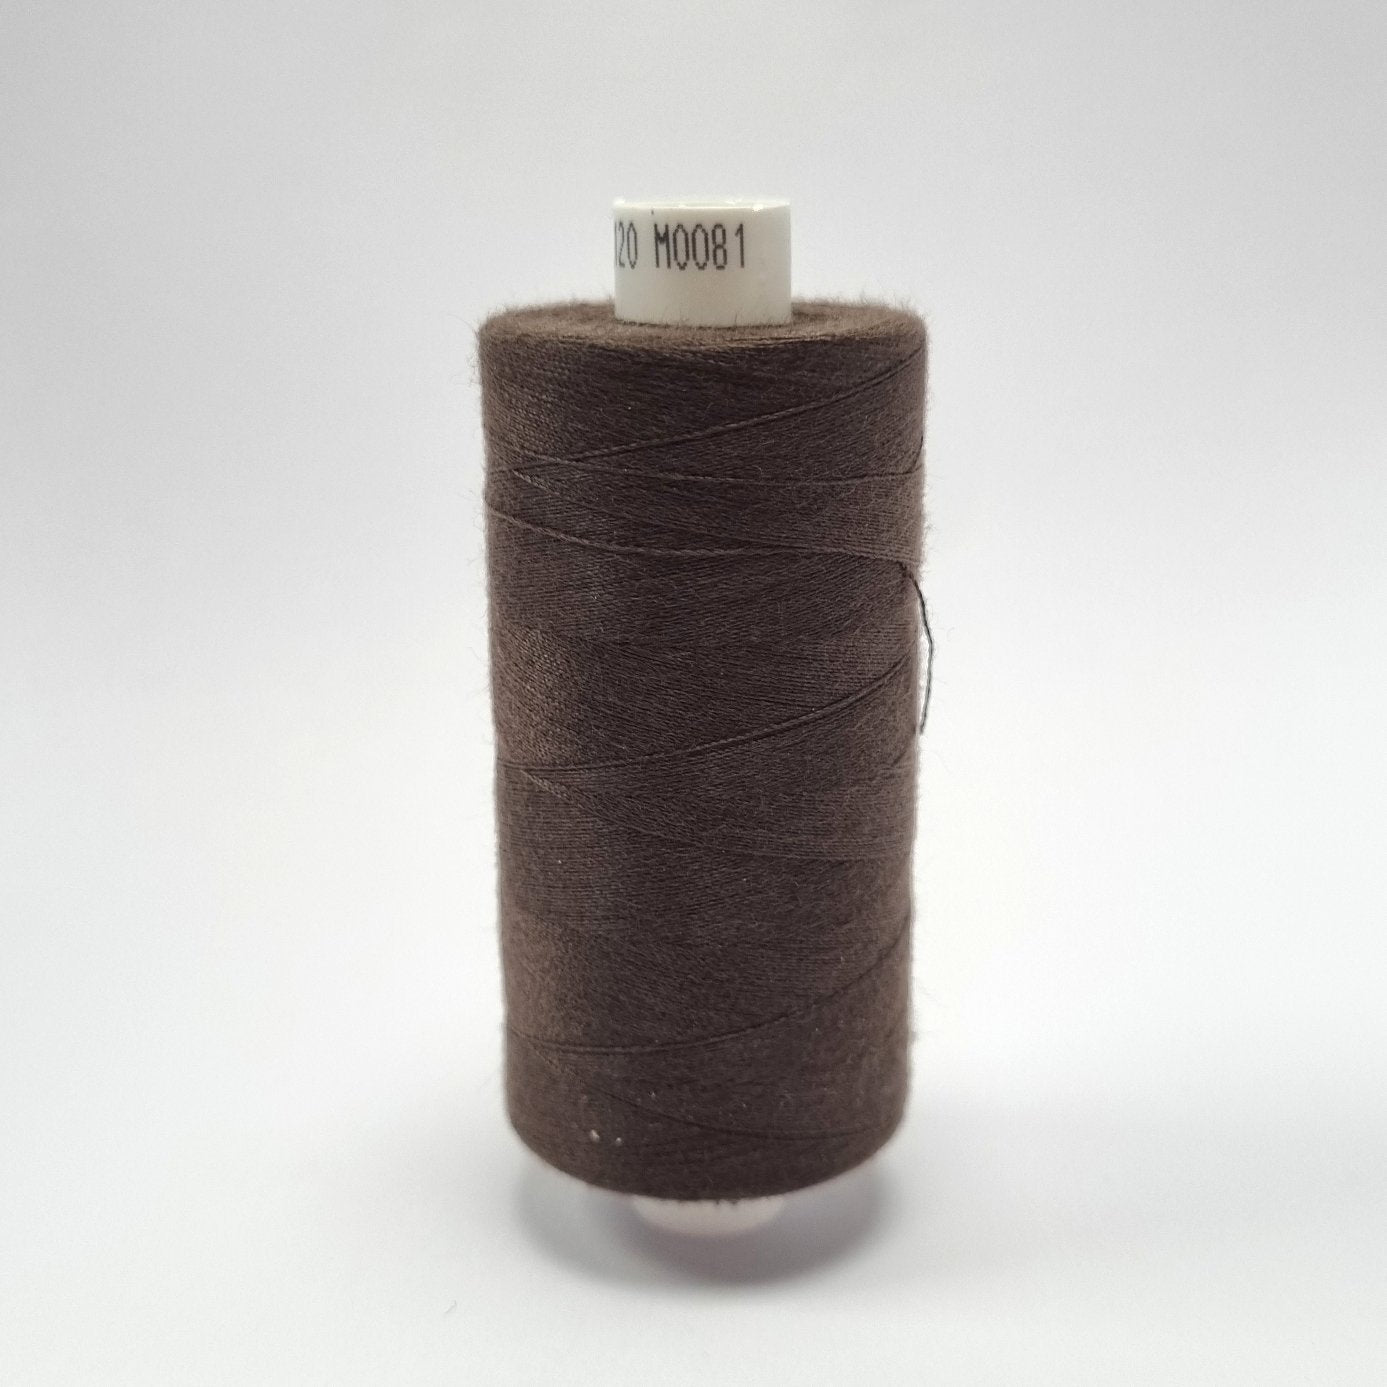 Moon Thread, Dark Brown, 1000 yard reels 99p from Jaycotts Sewing Supplies